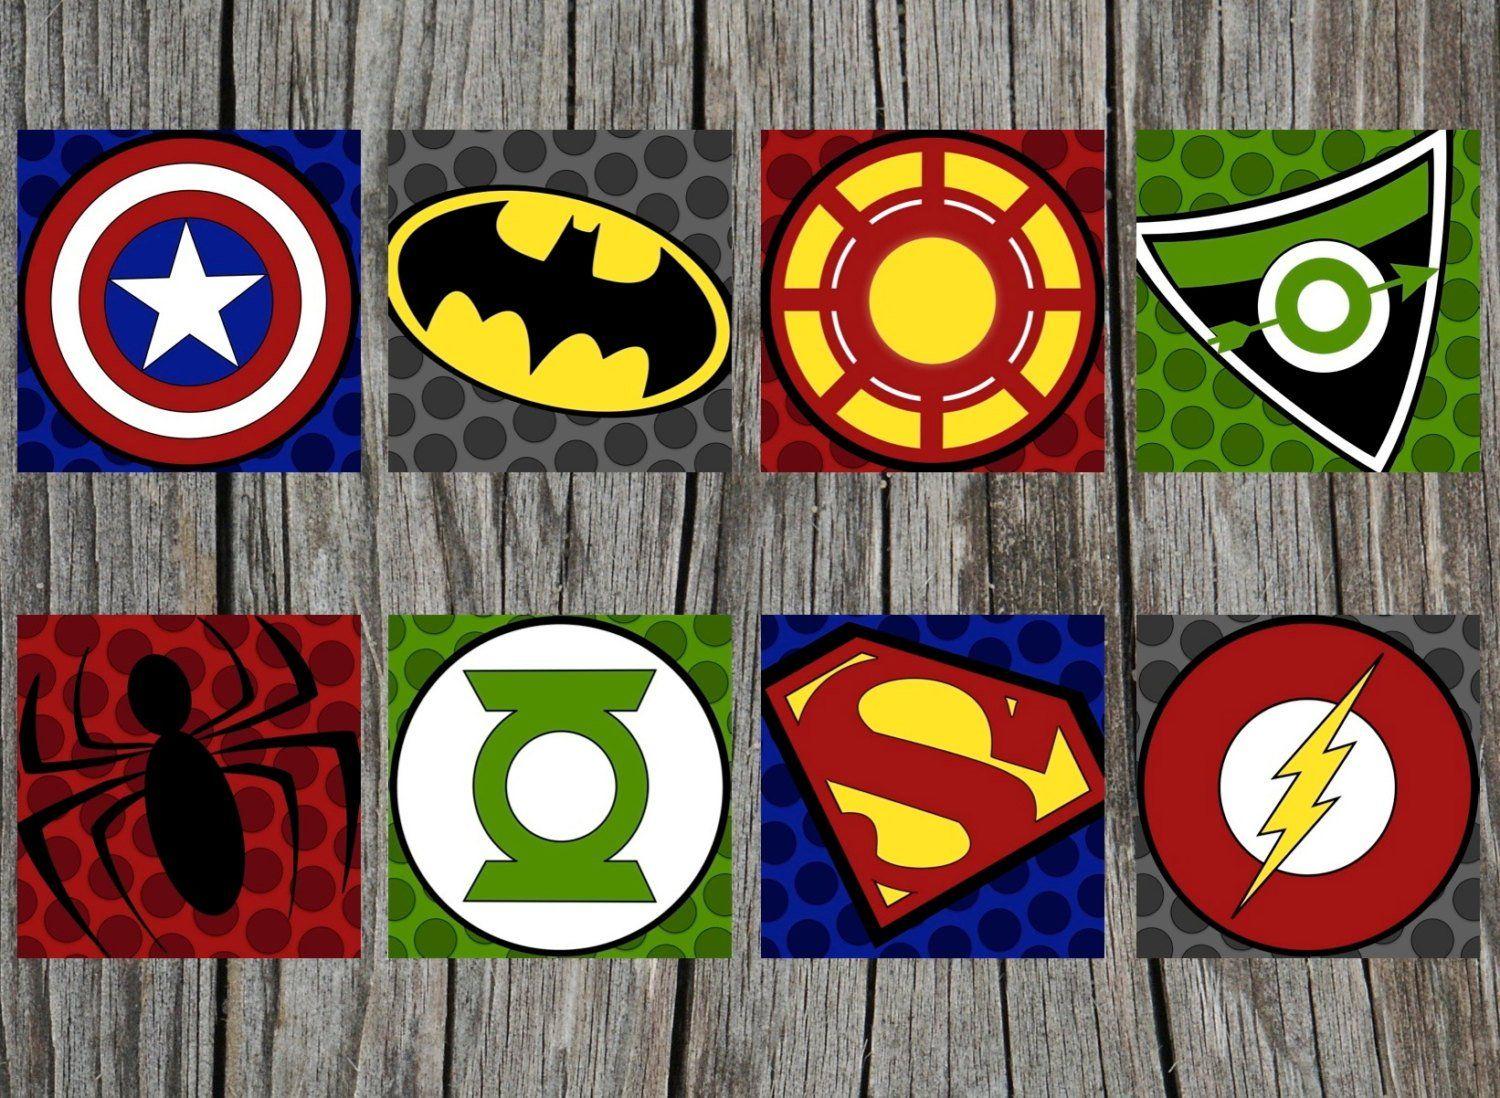 Every Superhero Logo - Every Superhero Logo Marvel | www.picsbud.com